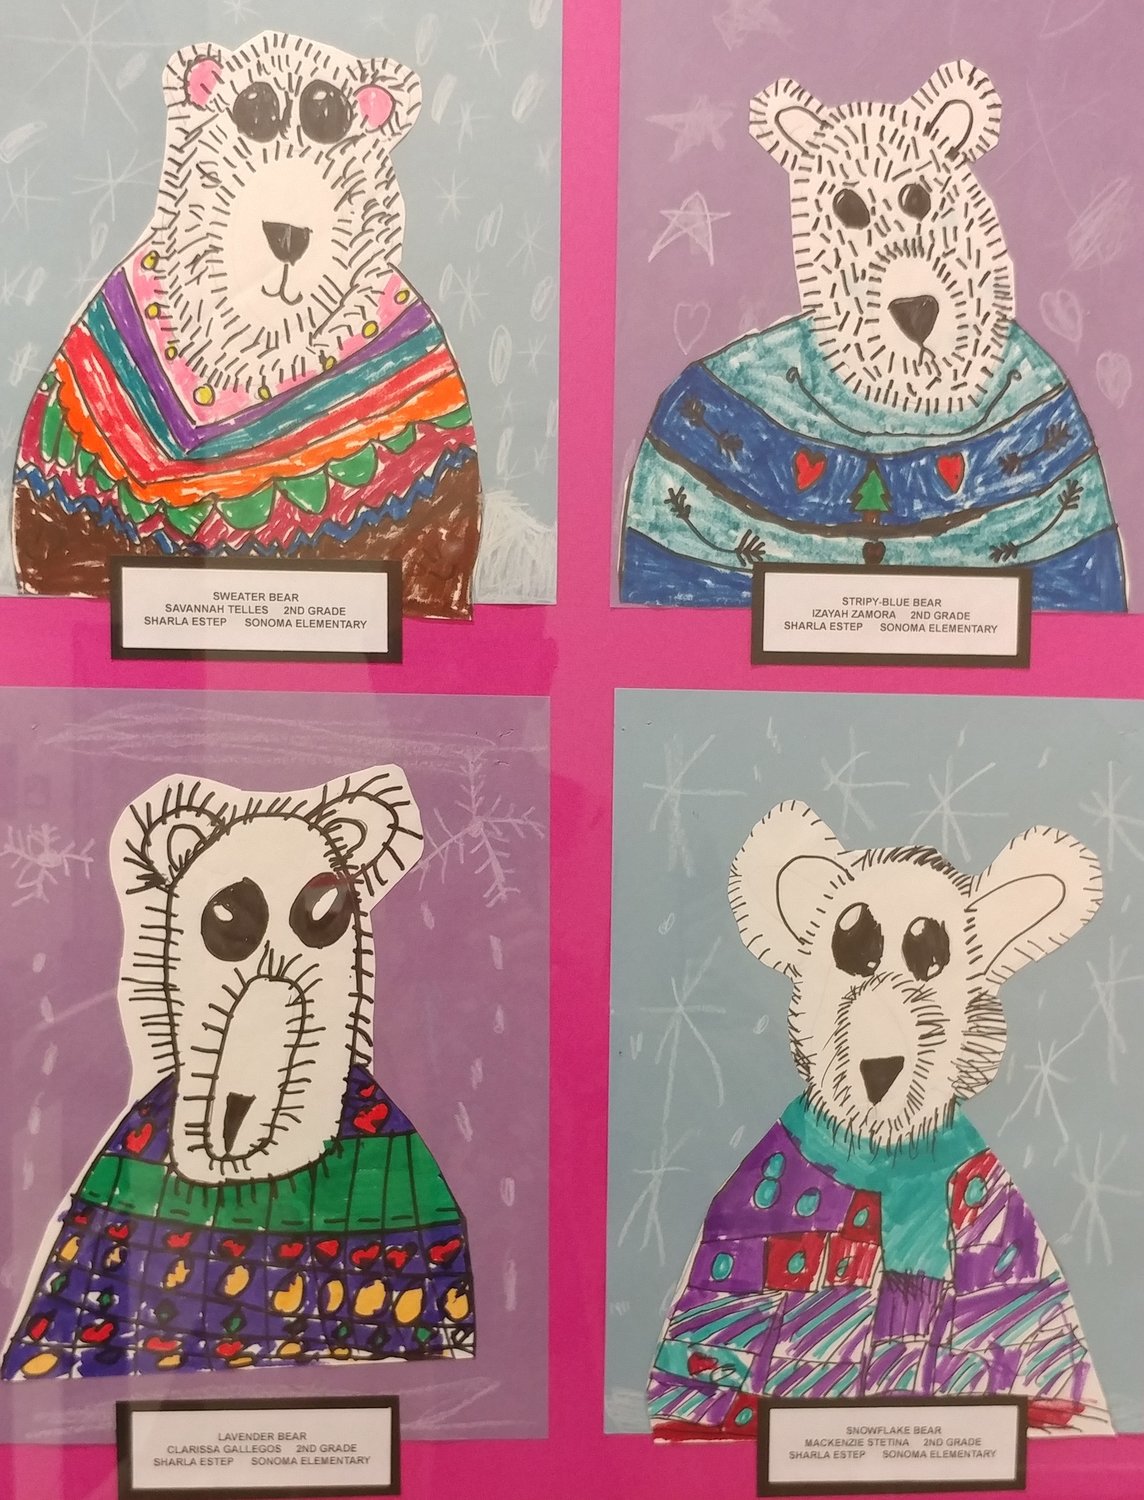 Artwork by Sonoma Elementary (Las Cruces Public Schools) second-graders; top left: “Sweater Bear,” by Savannah Telles; top right: “Stripy-Blue Bear,” by Izayah Zamora; bottom right: “Lavender Bear,” by Clarissa Gallegos; and bottom right: “Snowflake Bear,” by MacKenzie Stetina. Their art teacher is Sharla Estep.